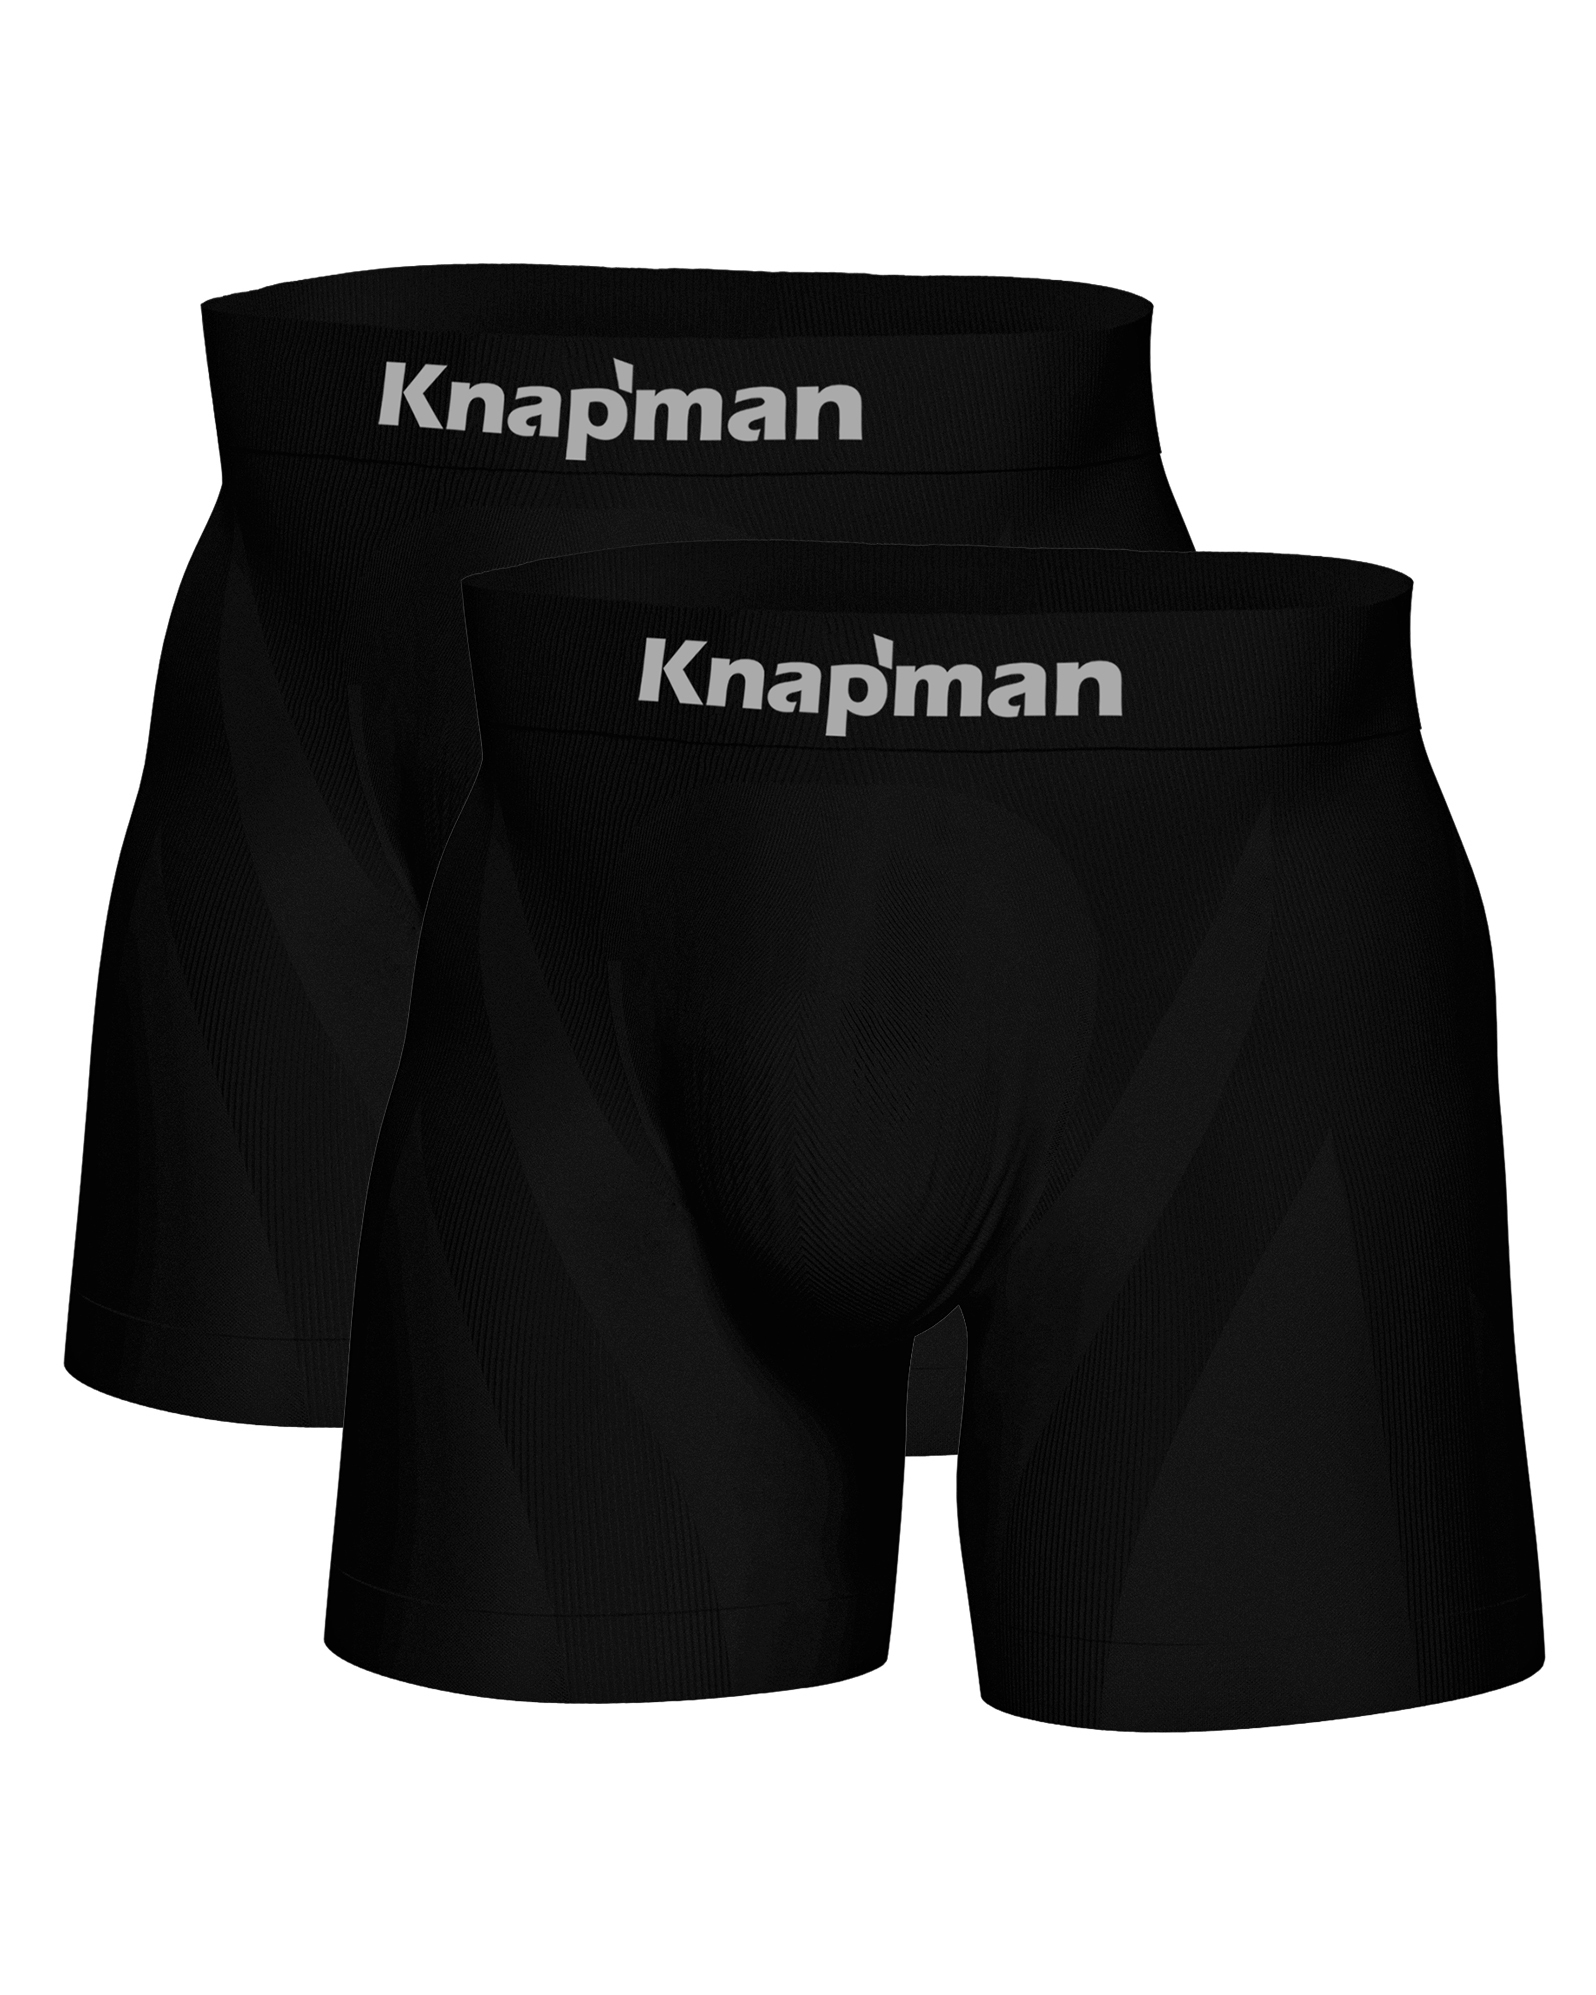 Knapman Ultimate Comfort Boxershort 3.0 Black | Twopack